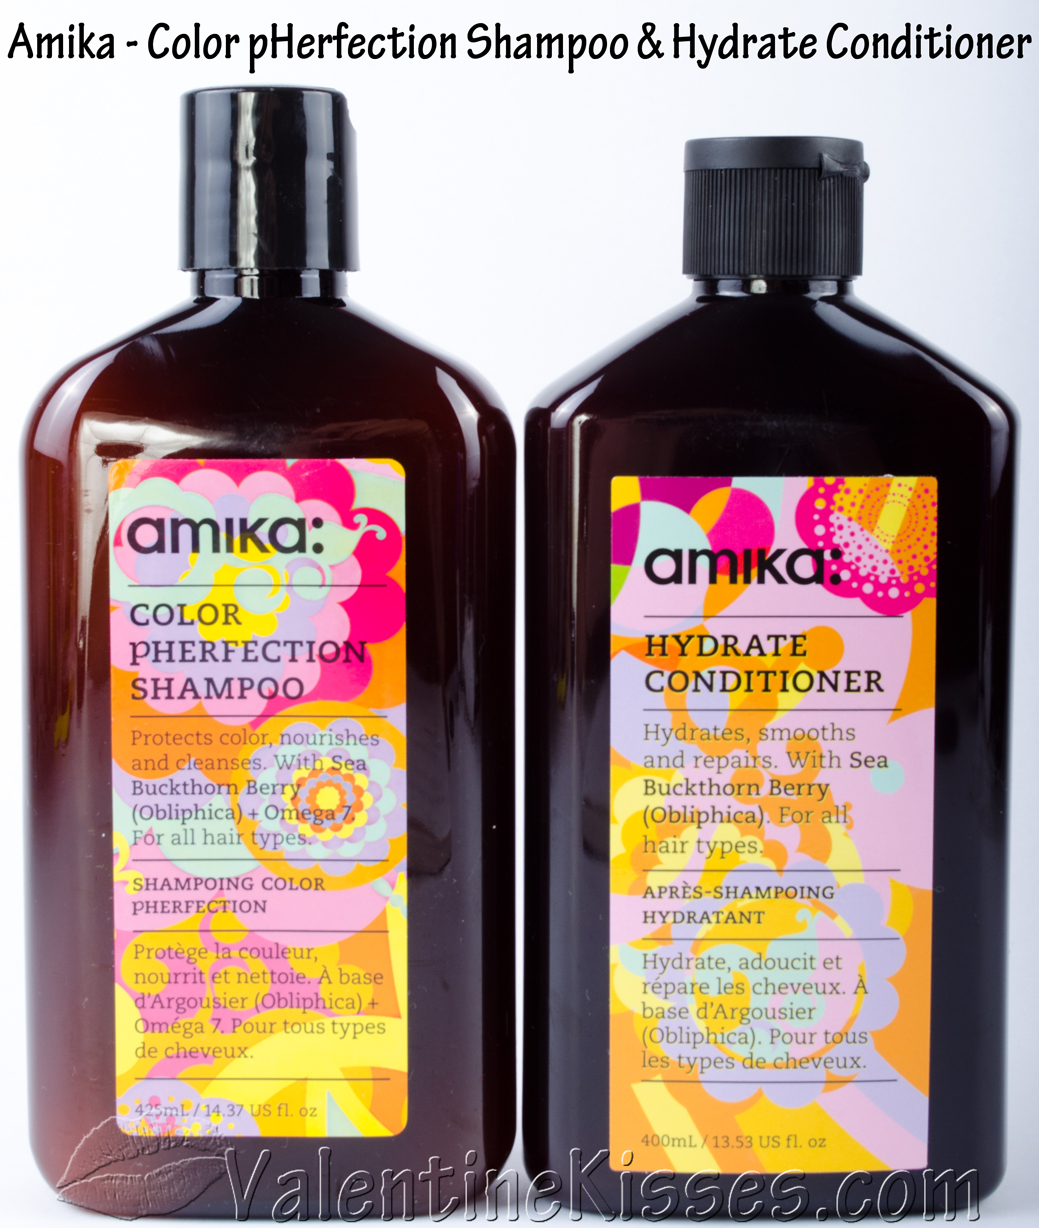 Valentine Kisses: Amika Color pHerfection Shampoo ...